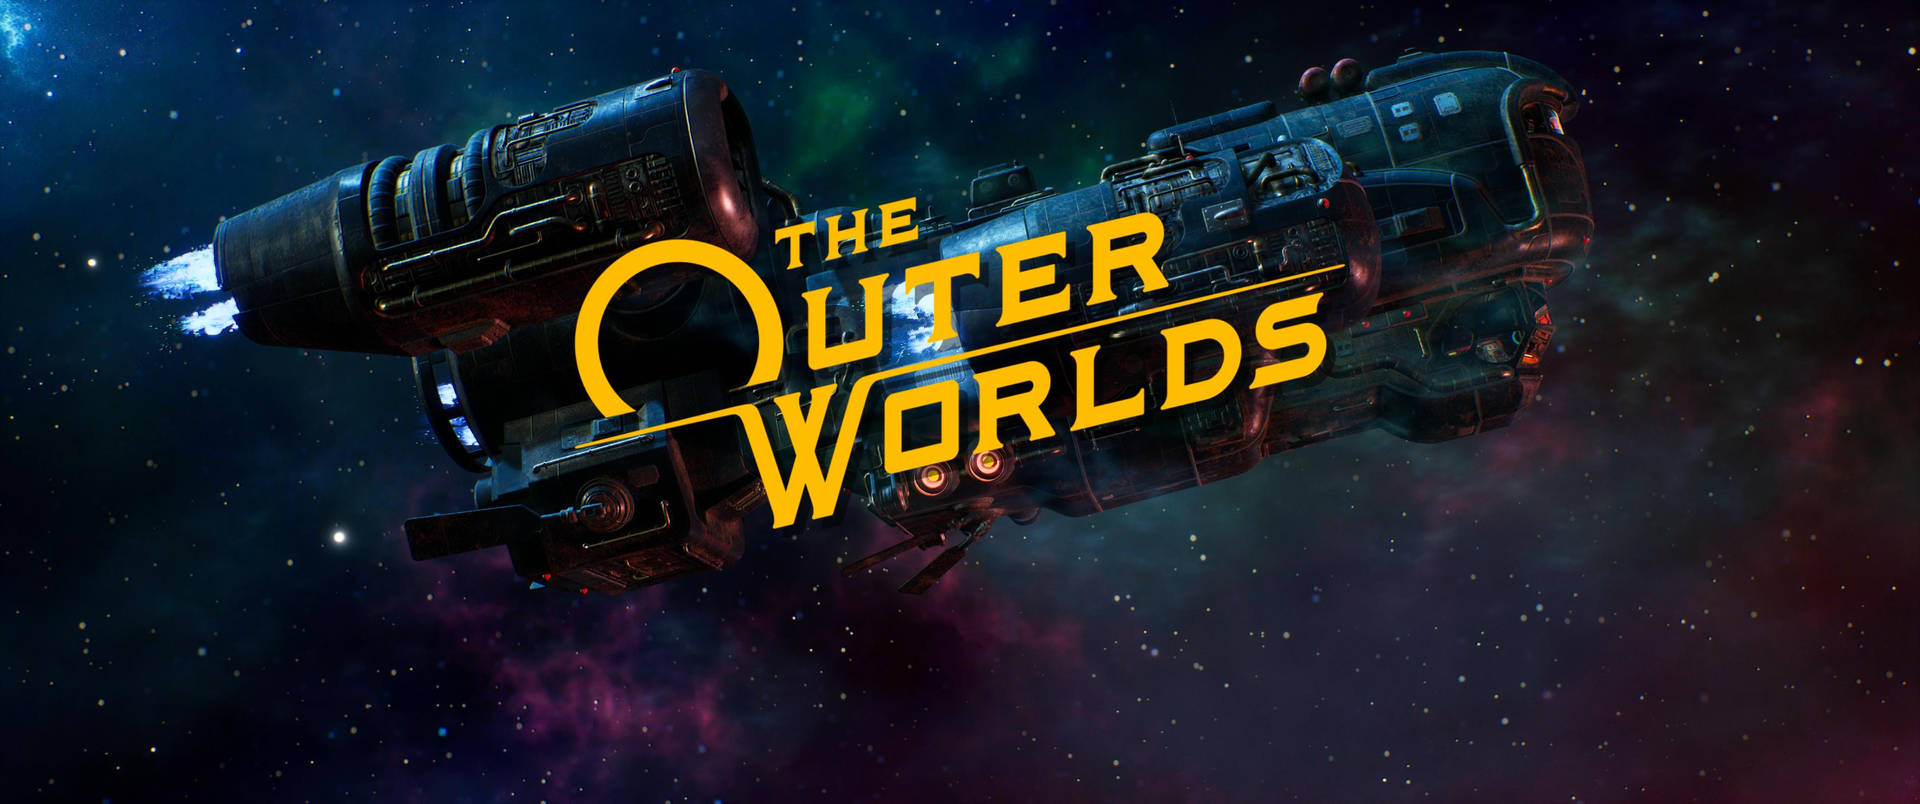 Outrun The Outer Worlds wallpaper 3840 x 2160  rtheouterworlds